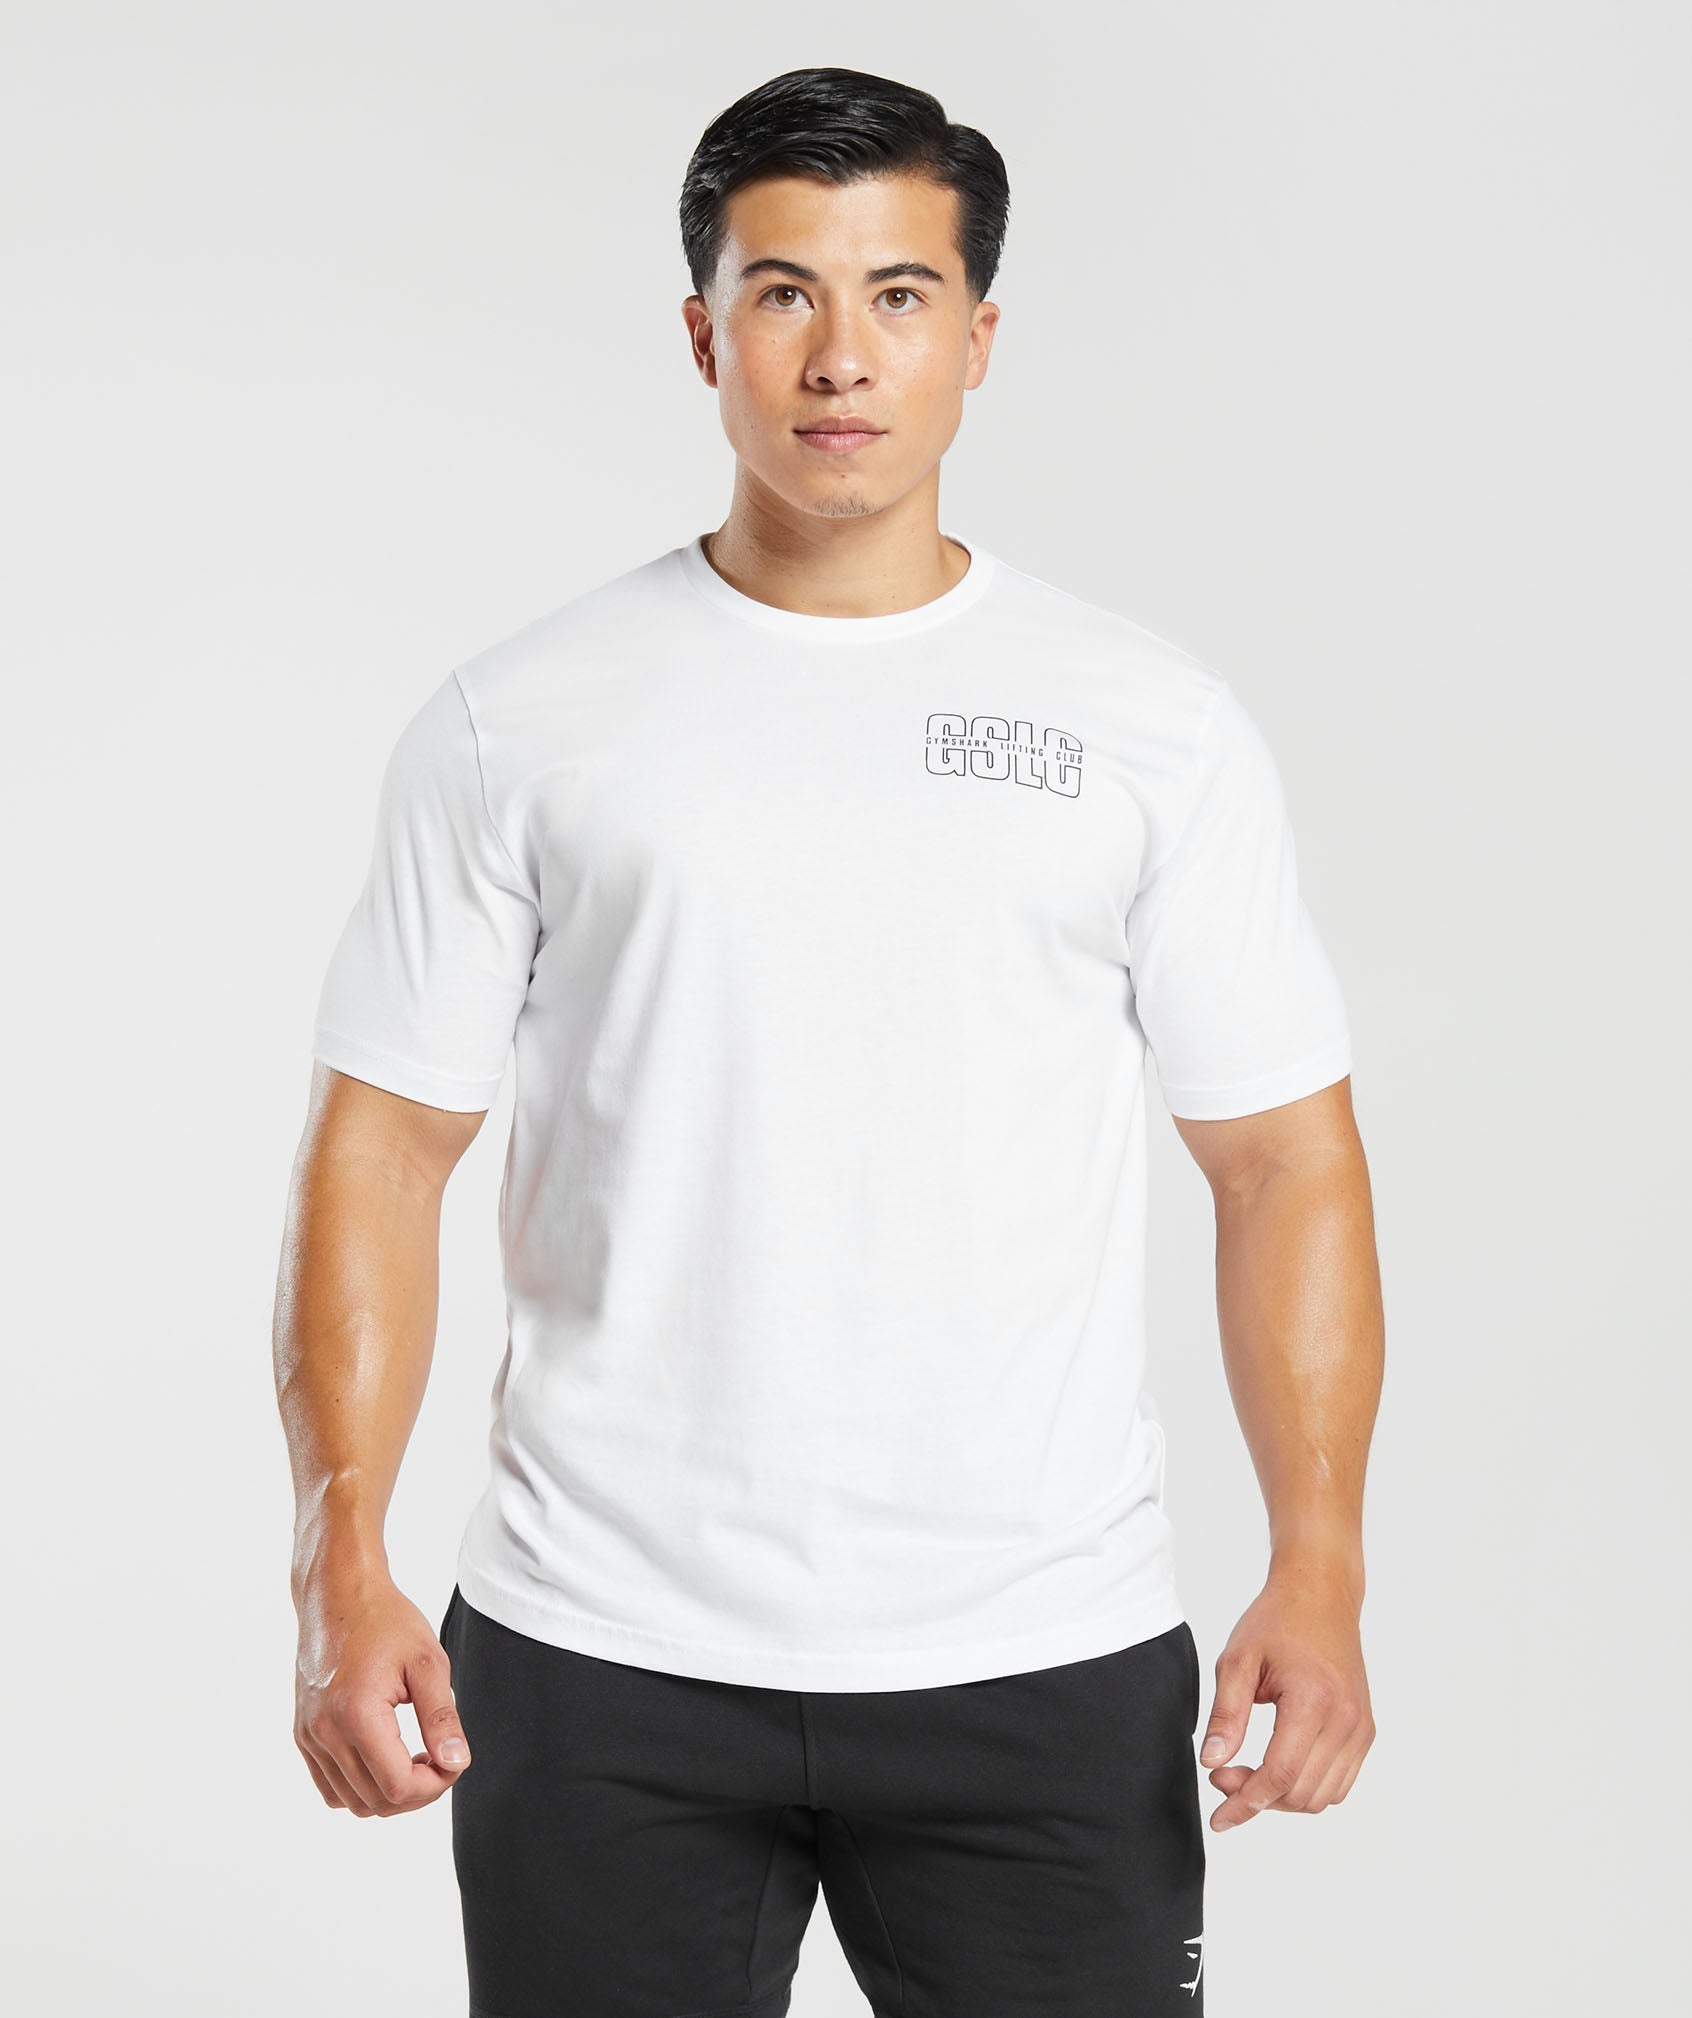 Lifting Club T-Shirt in White - view 1